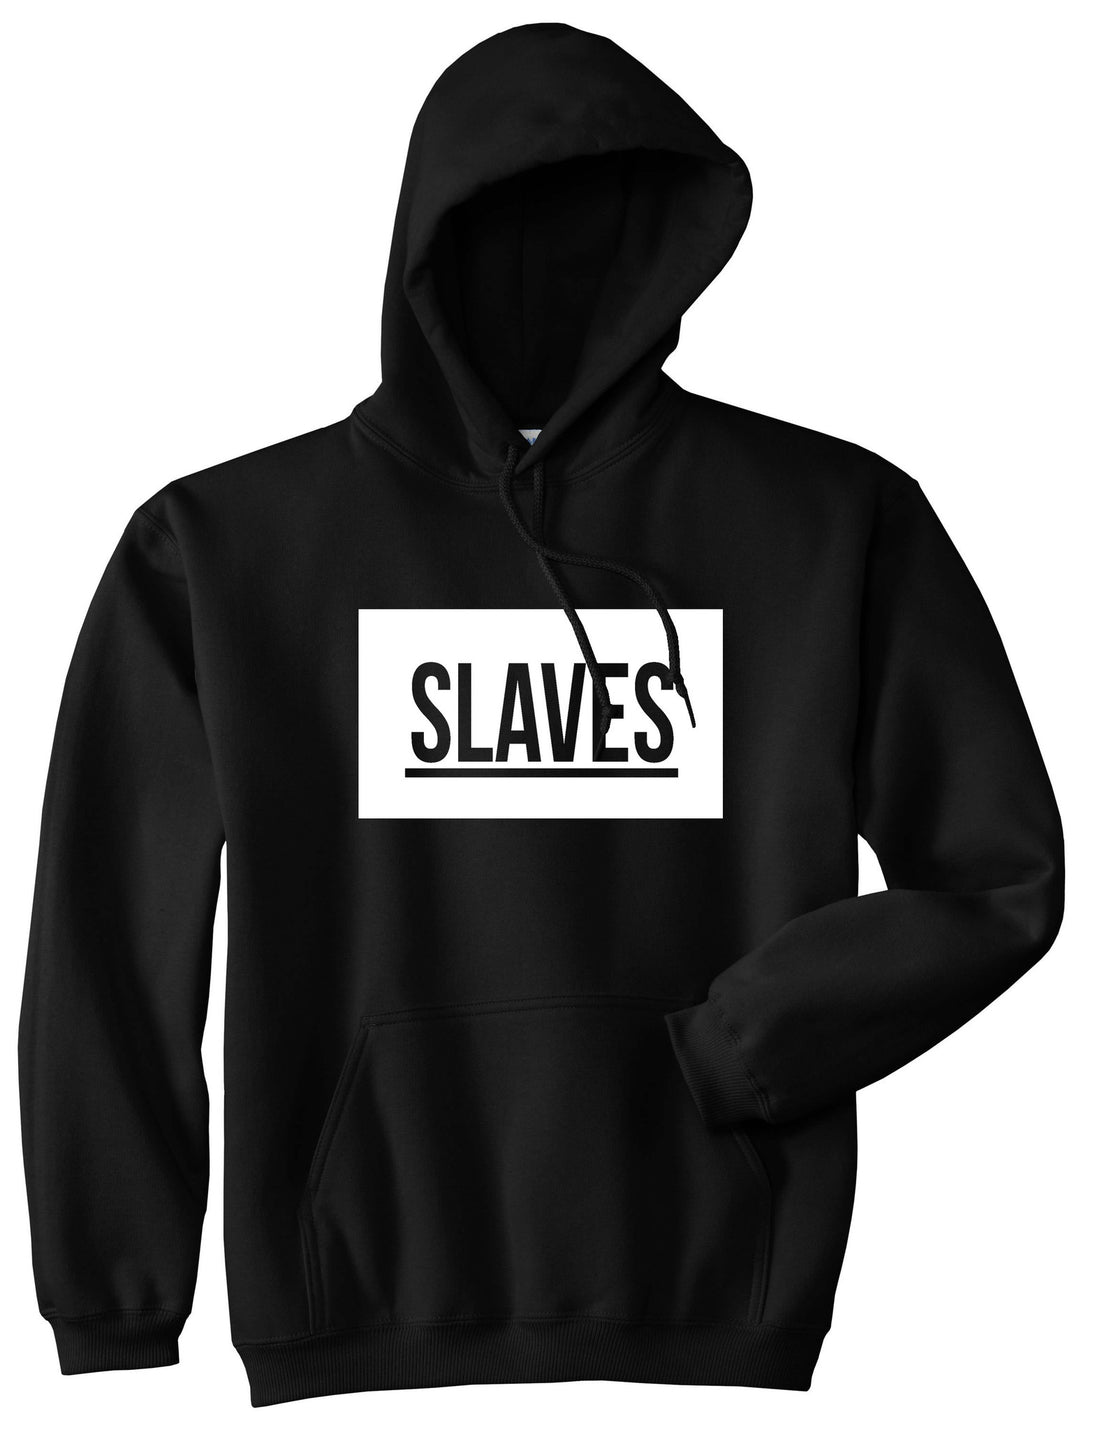 Slaves Fashion Kanye Lyrics Music West East Boys Kids Pullover Hoodie Hoody In Black by Kings Of NY